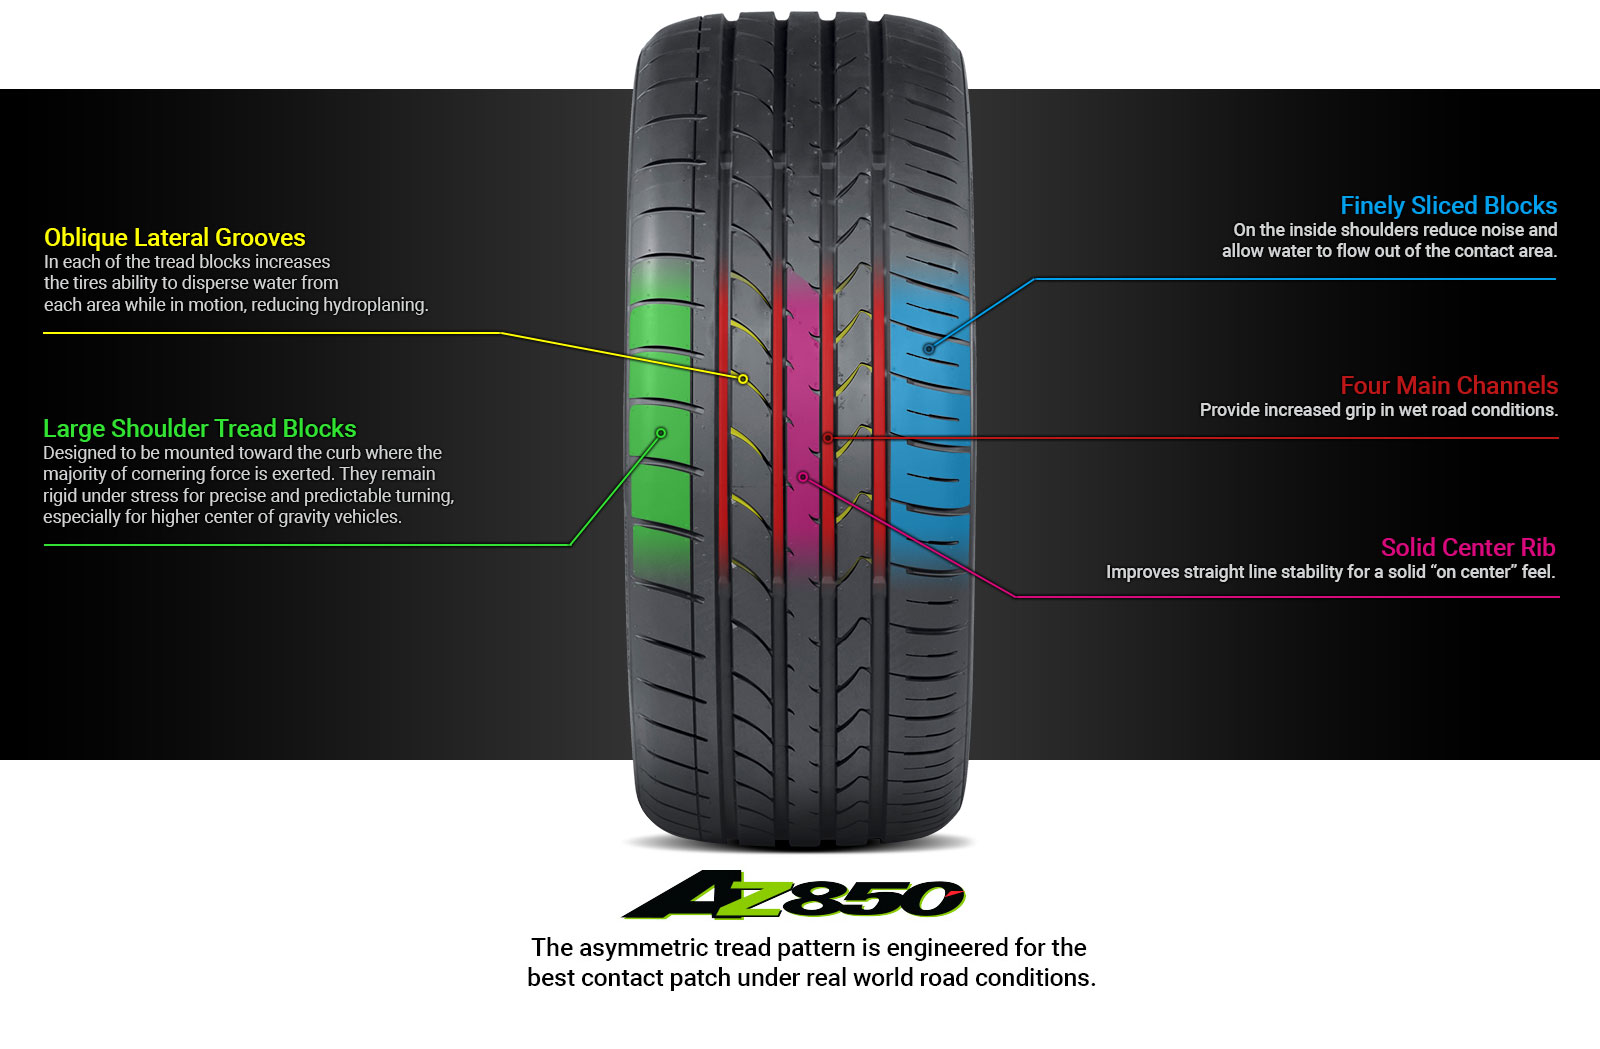 tire image with detailed description